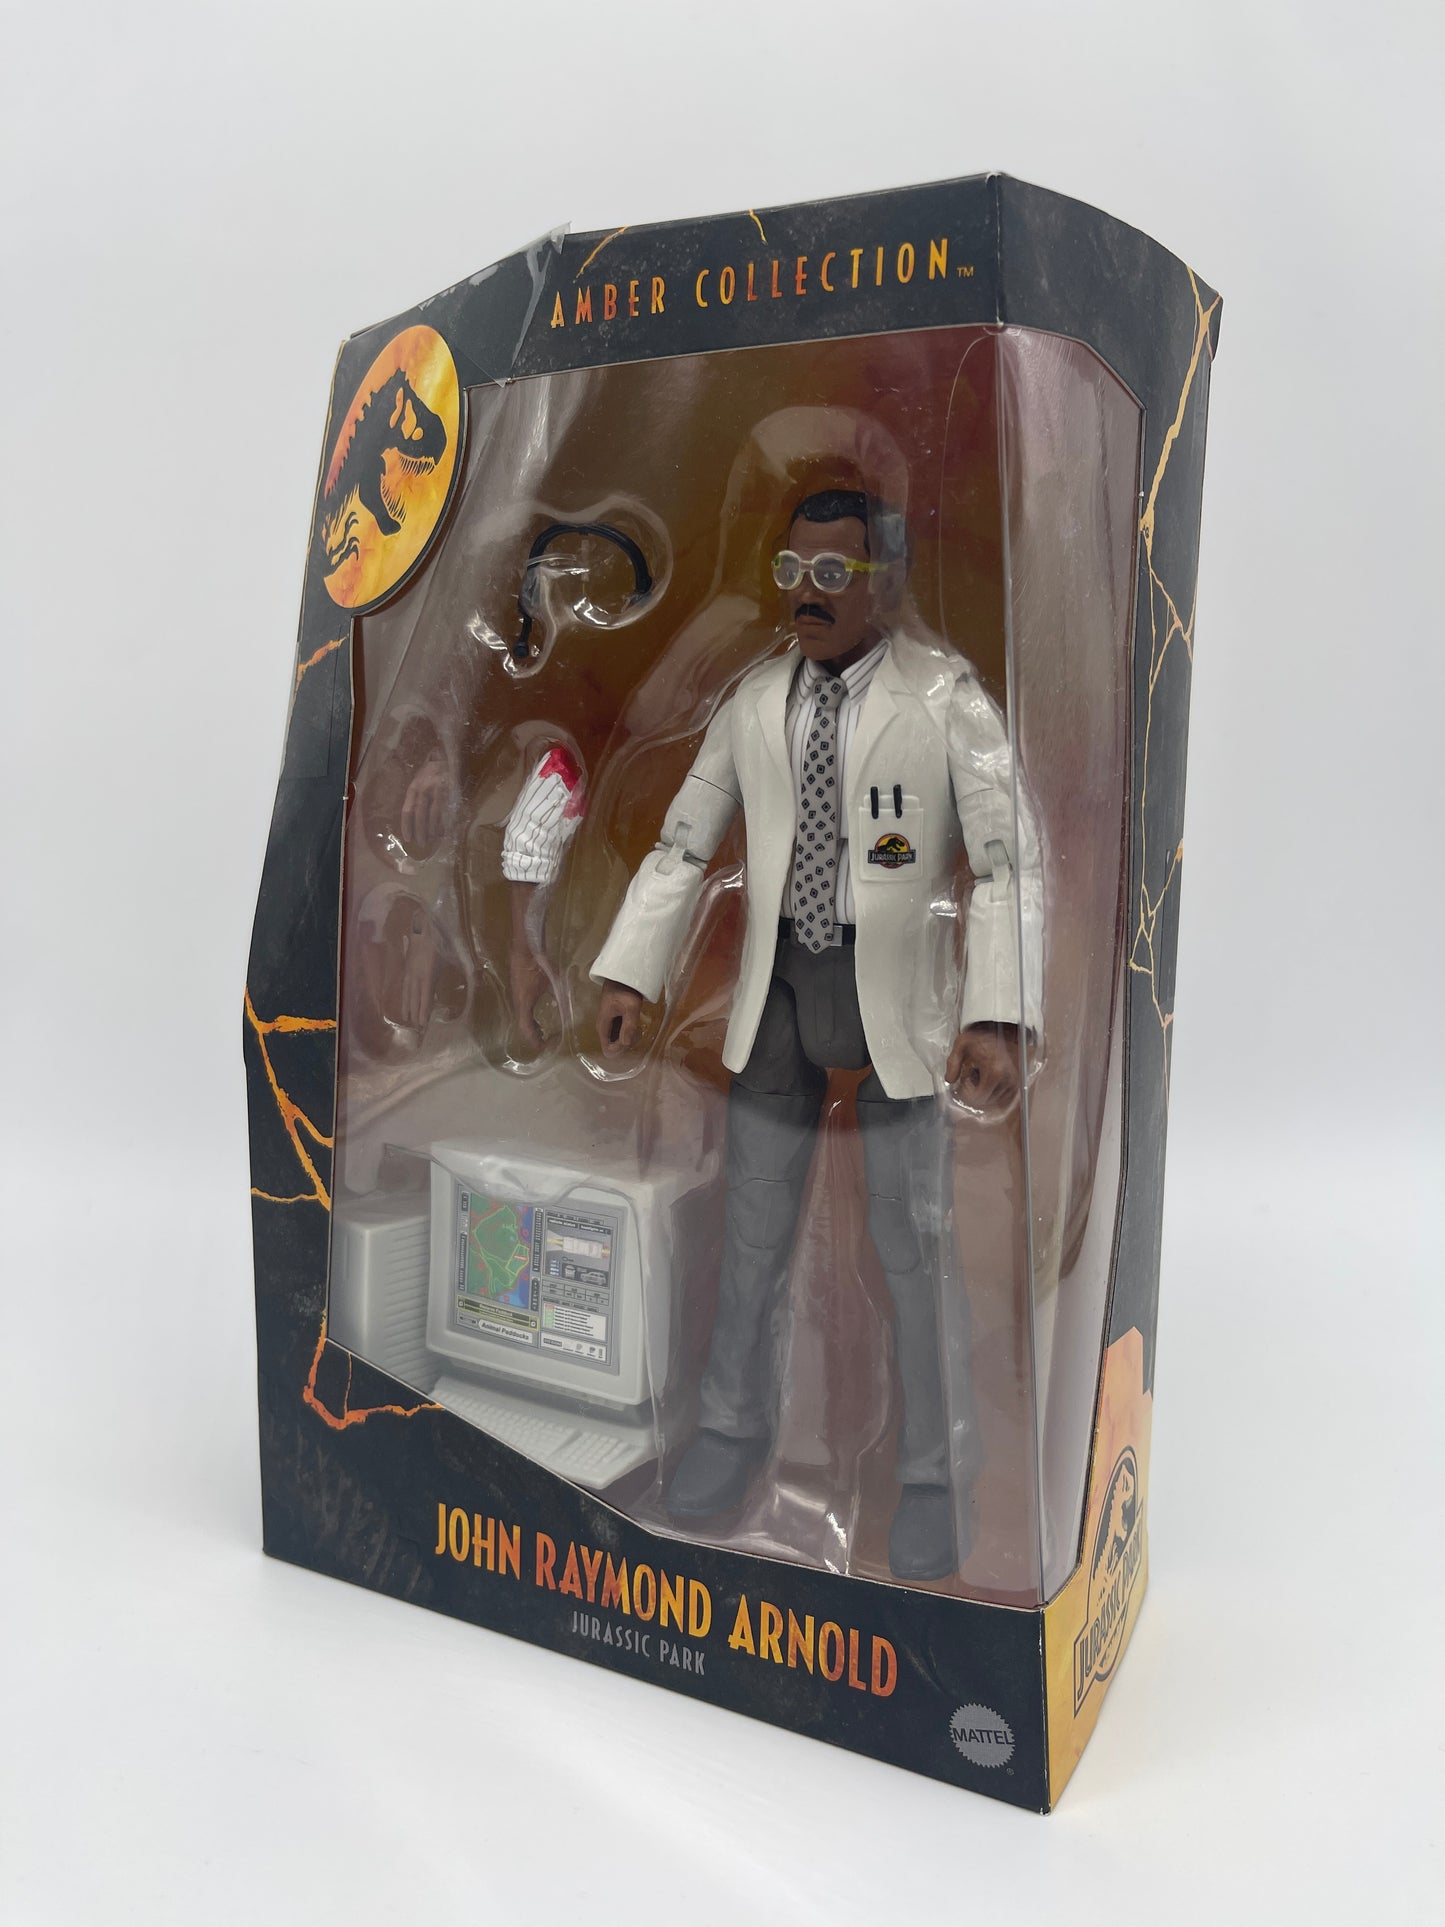 Jurassic Park Amber Collection "John Raymond Arnold" GWP81 Mattel (2020)